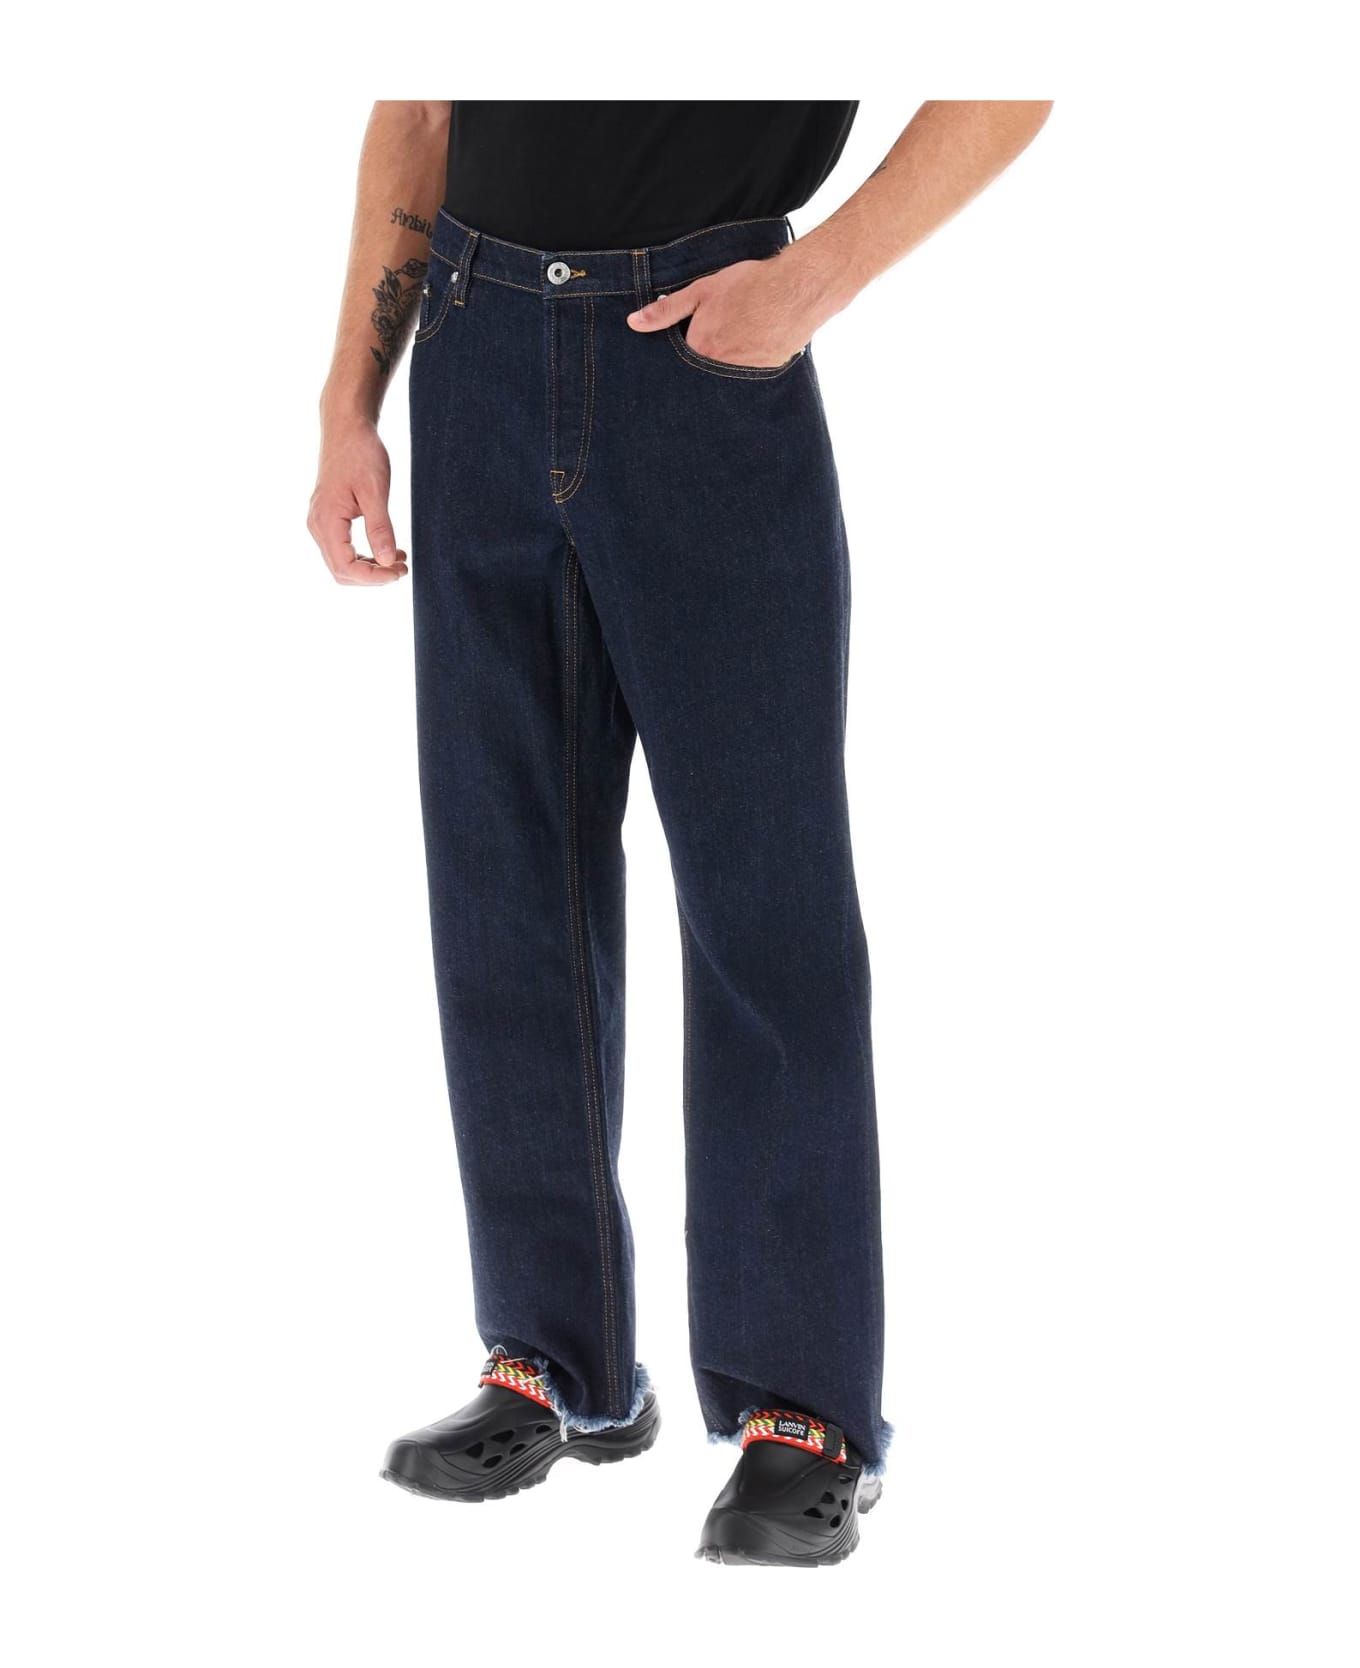 Lanvin Jeans With Frayed Hem - NAVY (Blue)